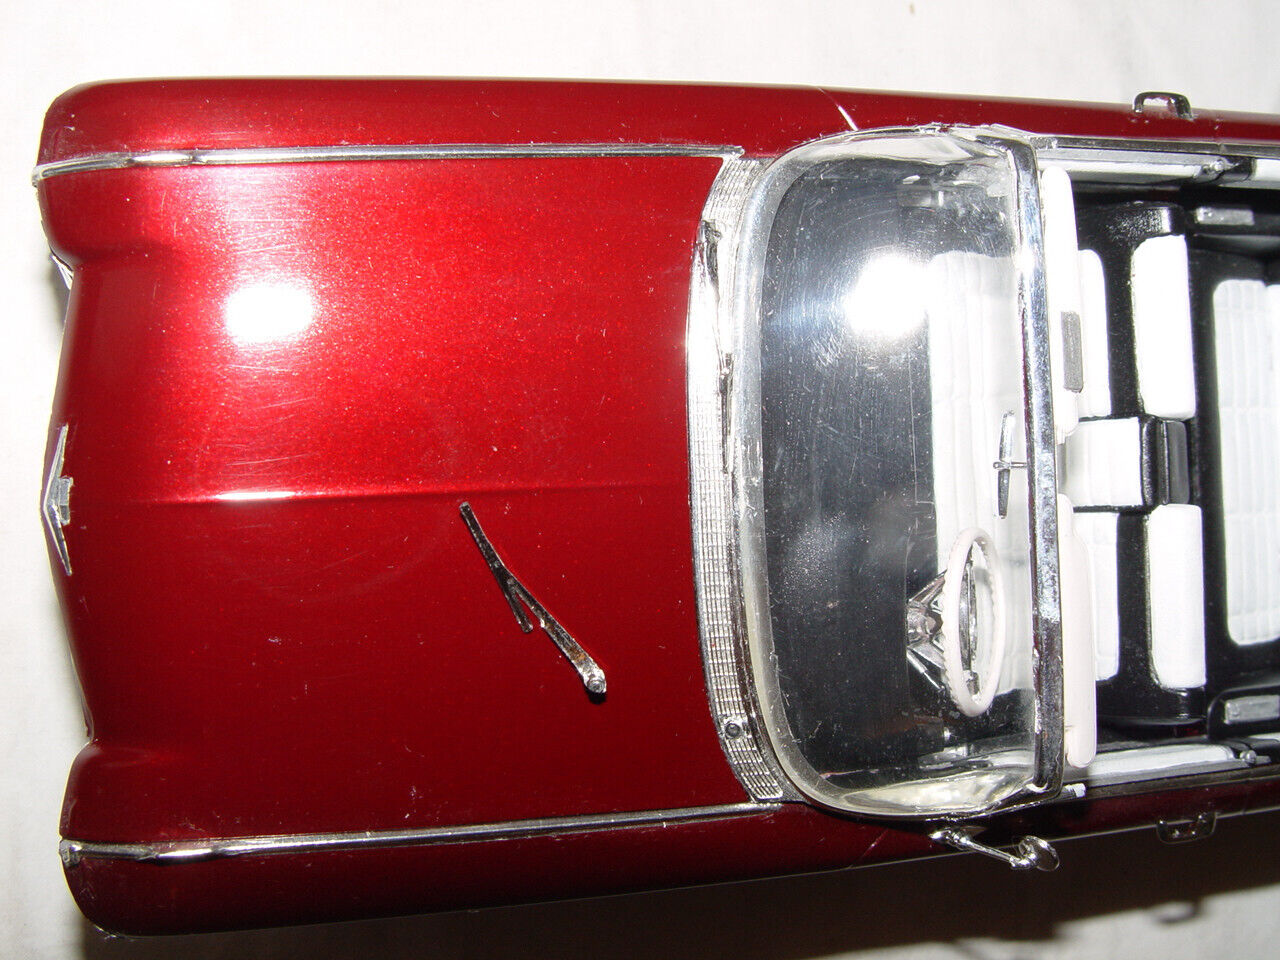 1959 Cadillac Convert, Built plastic kit, Details, Deep Wine Car, Black & Wht. I